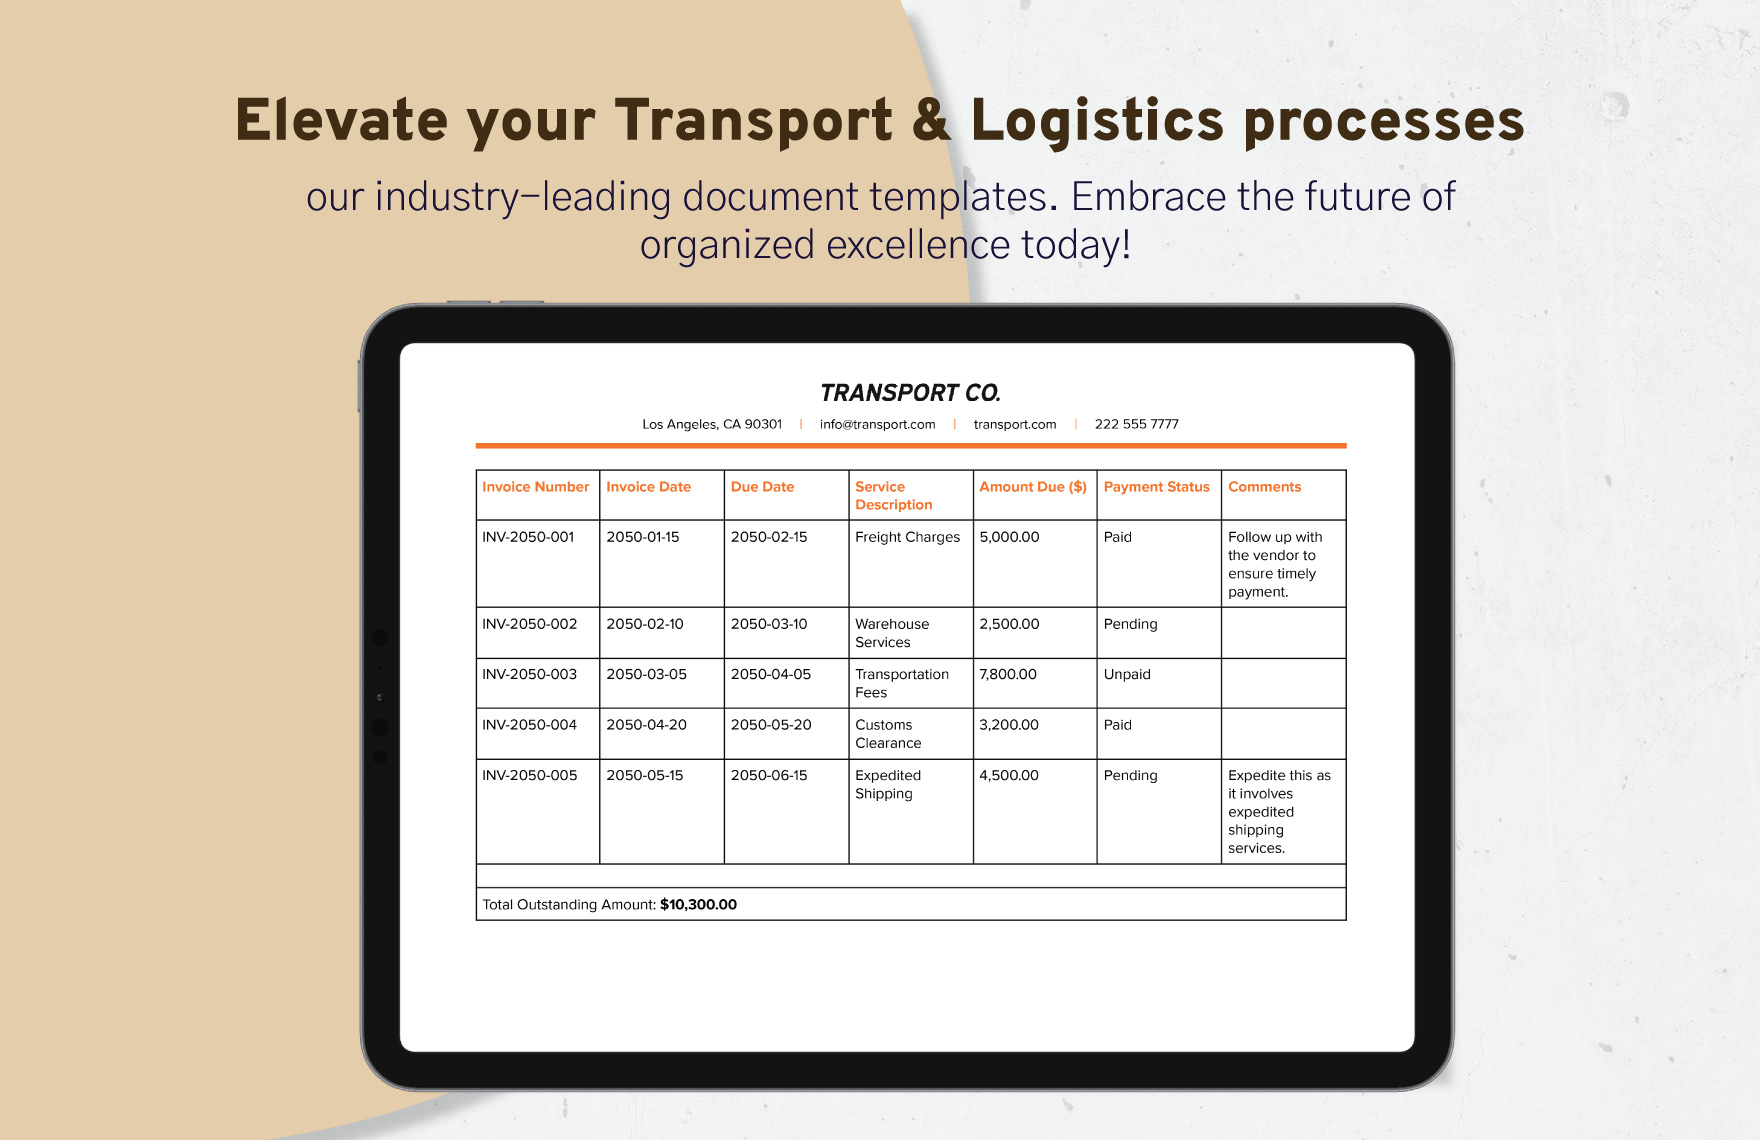 Transport and Logistics Vendor Payment Record Template